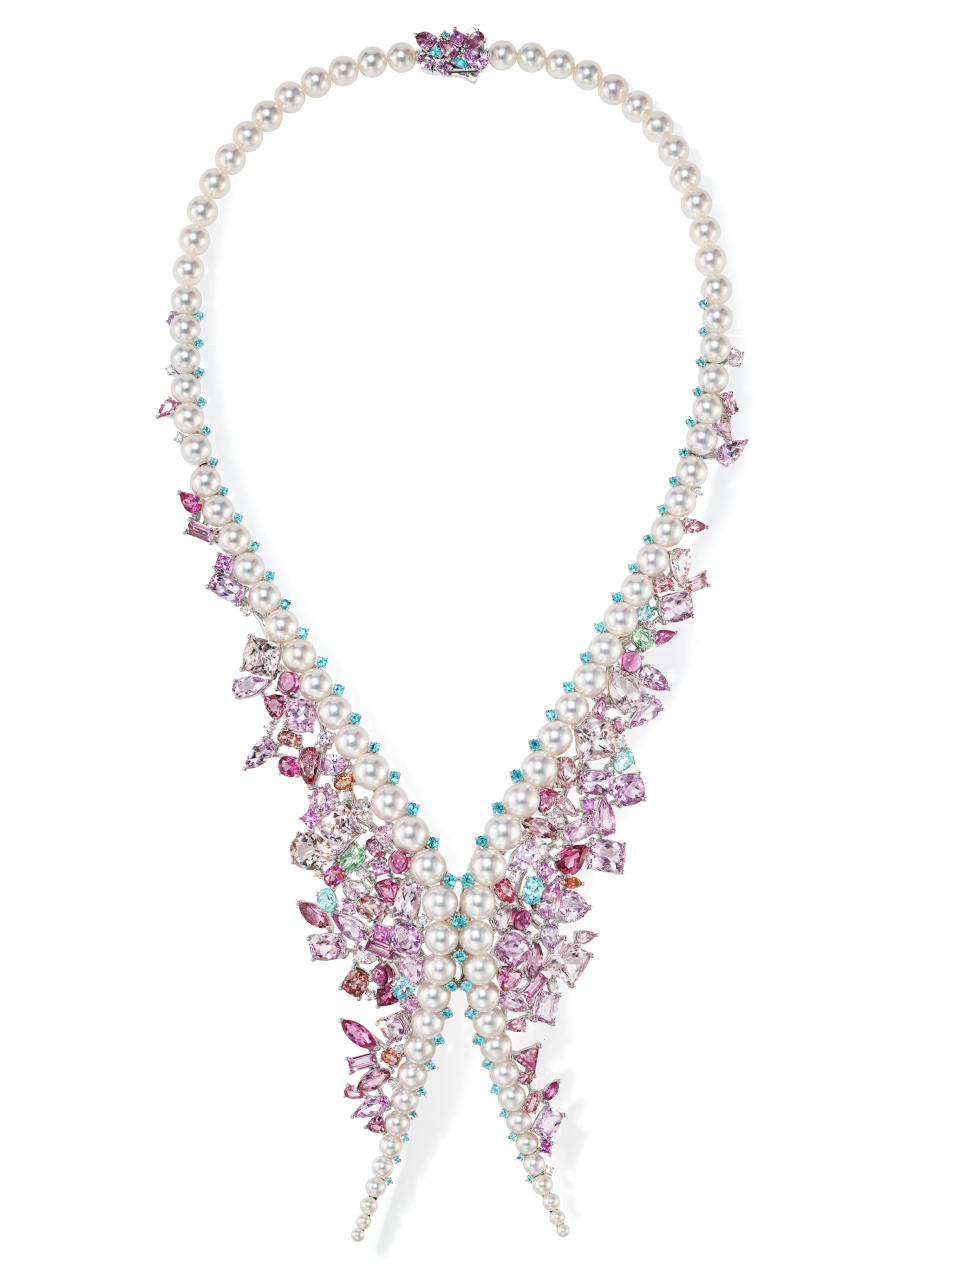 Tasaki Atelier 6 - High Jewelry - Flourish Necklace